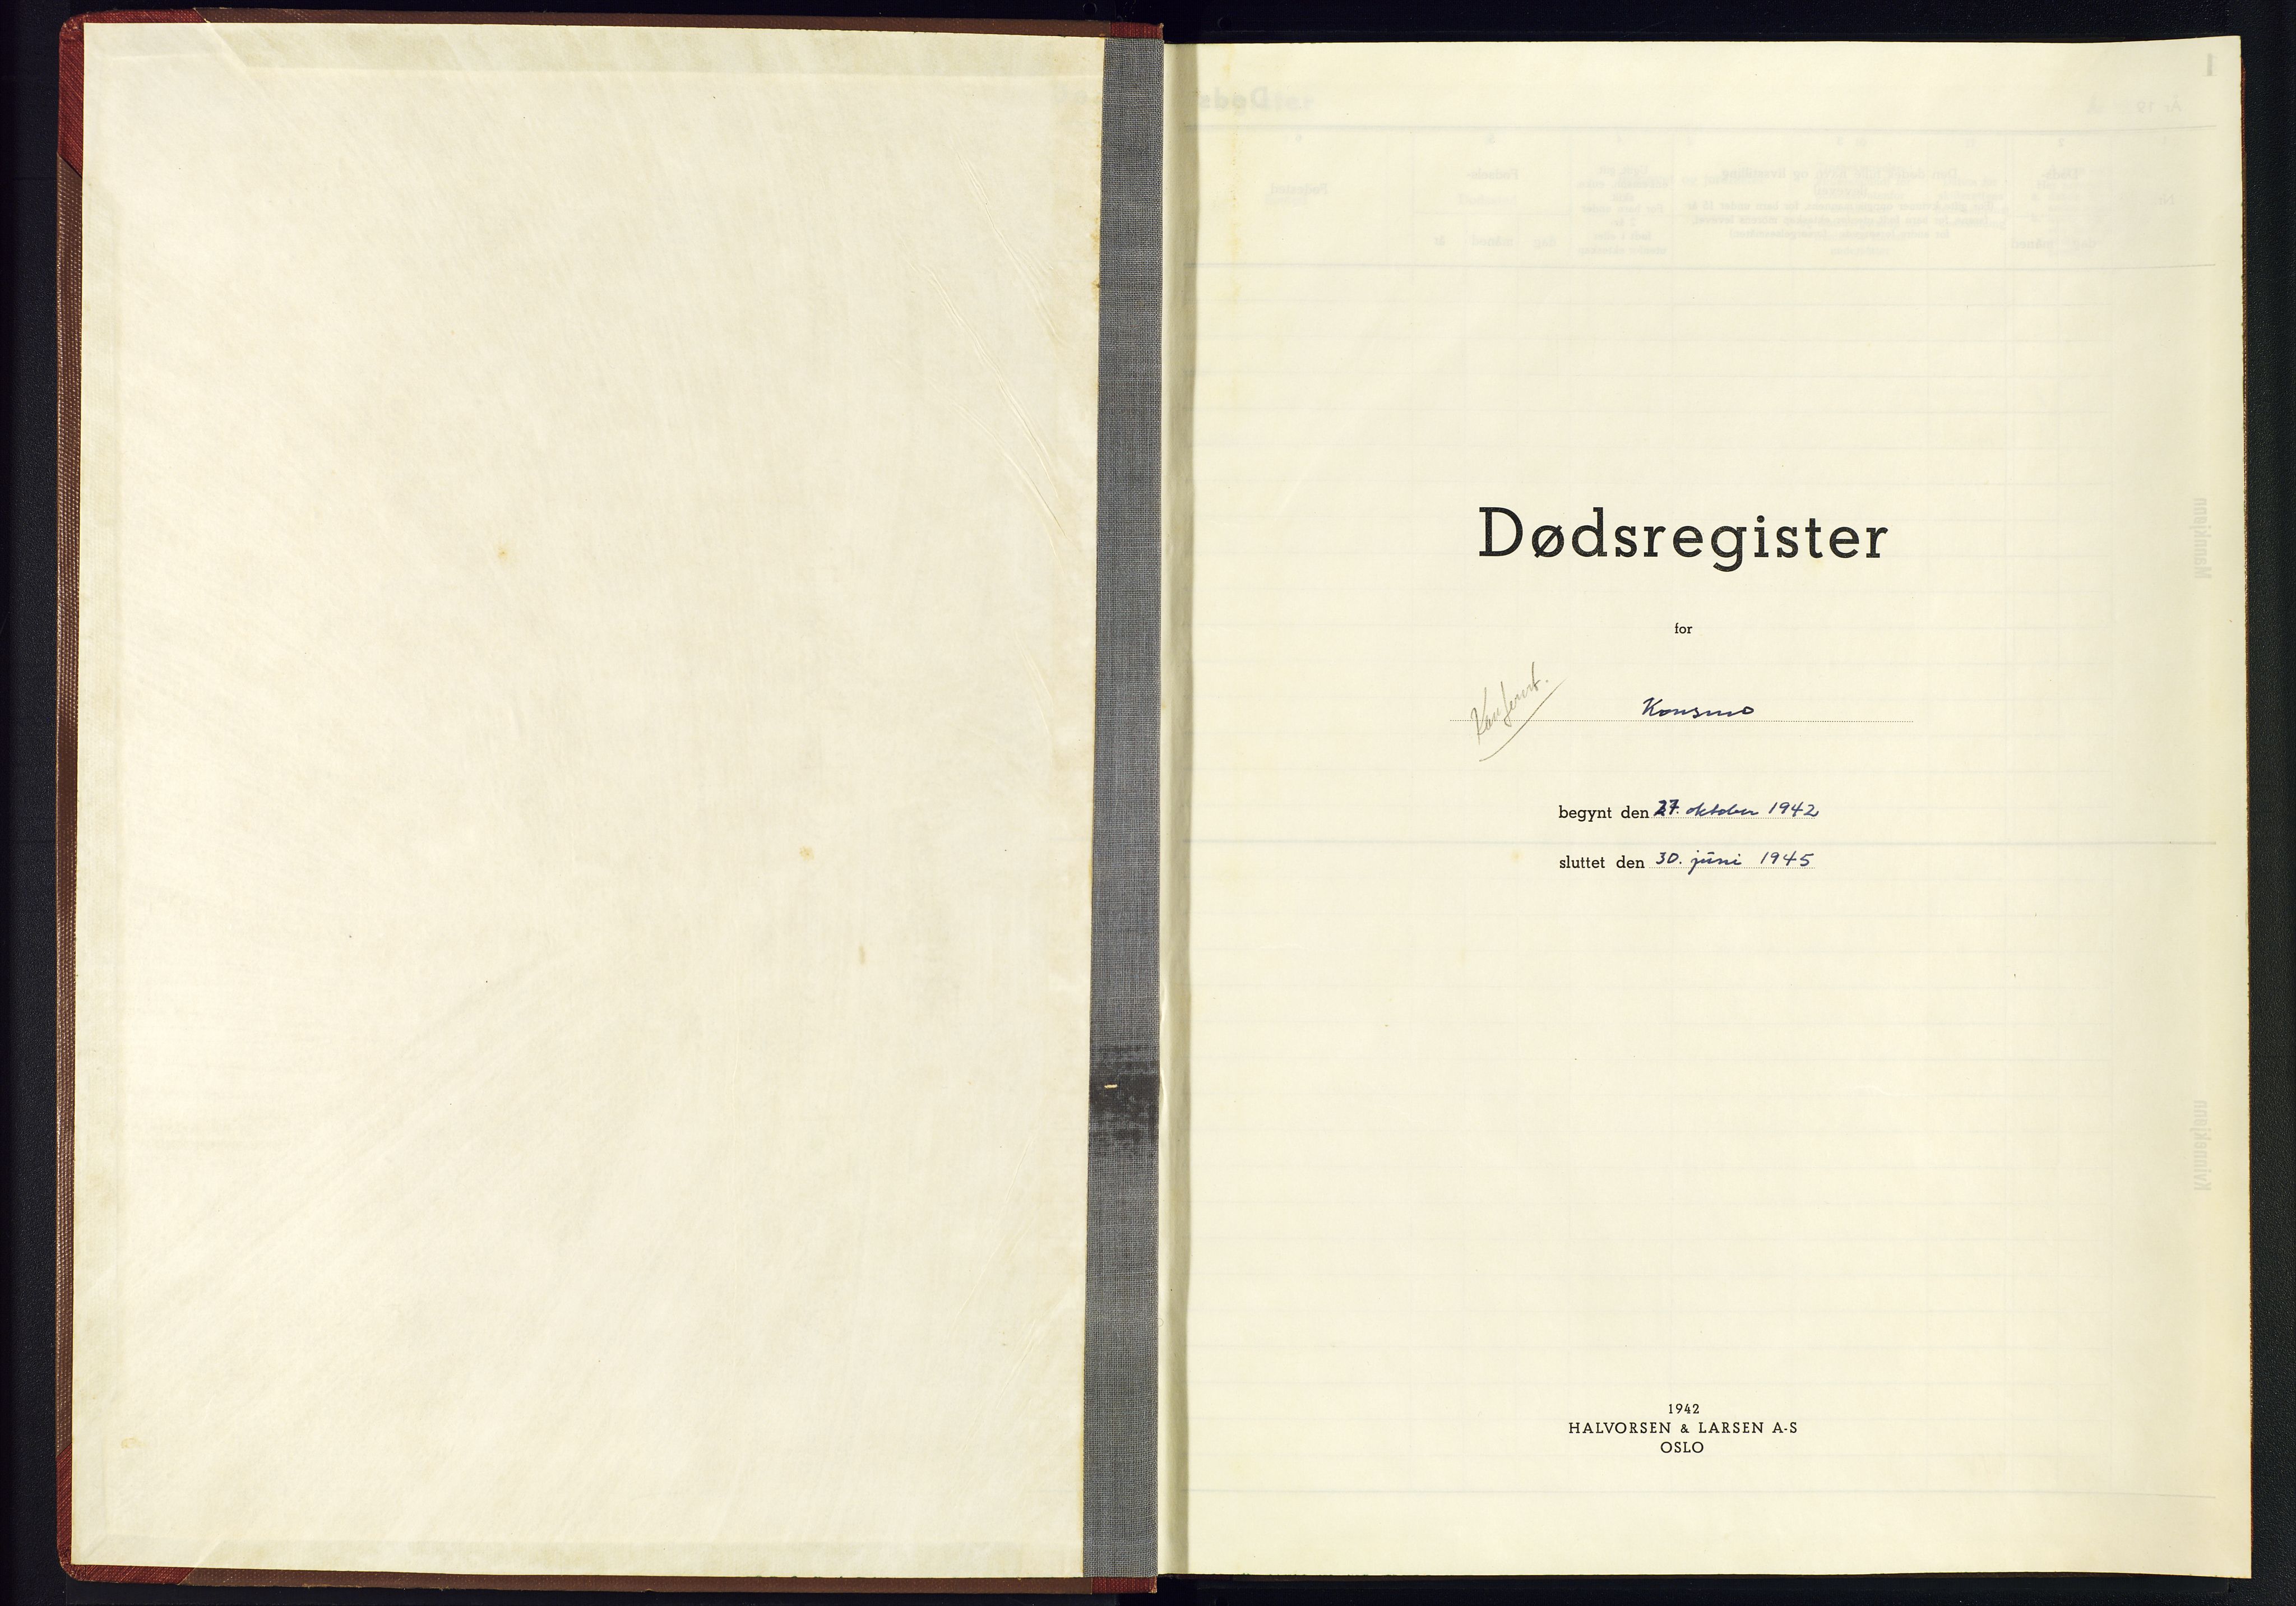 Nord-Audnedal sokneprestkontor, SAK/1111-0032/J/Jb/L0006: A-VI-6 - Dødsfallsregister Konsmo, 1942-1945